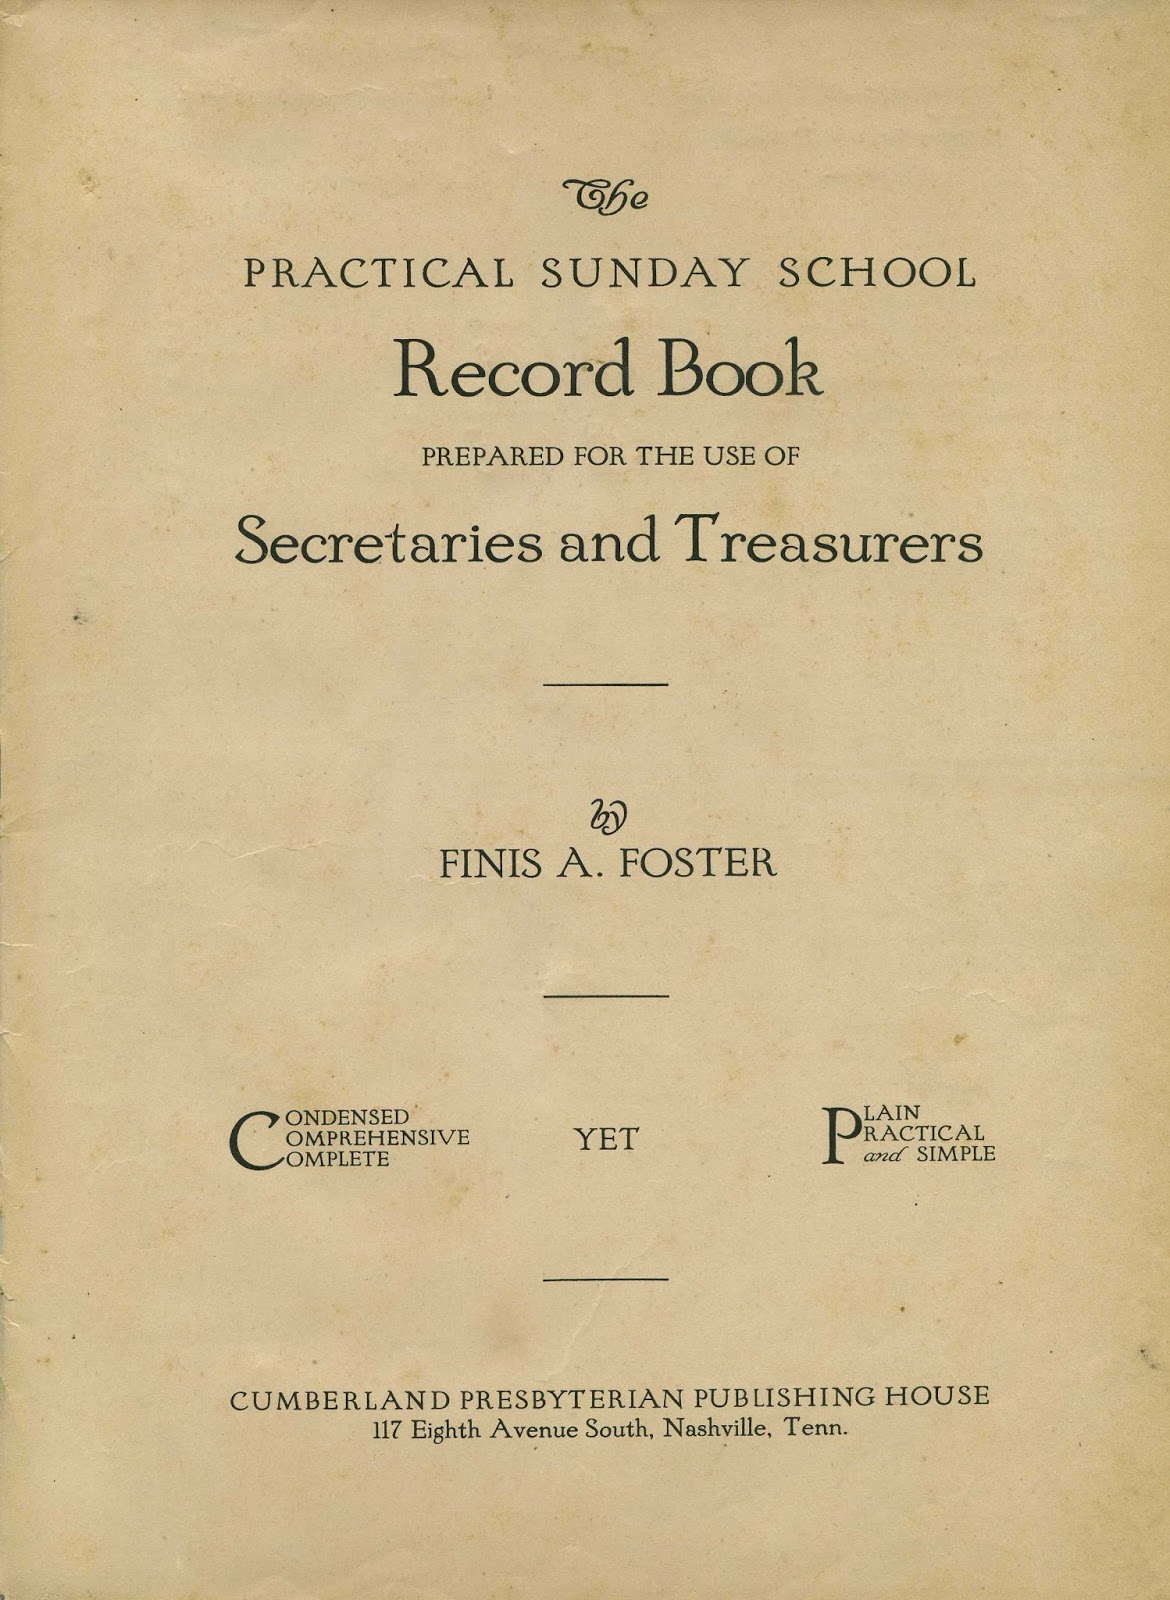 Wells Creek Sunday School Book, ca. 1932, Houston County, TN. Archives